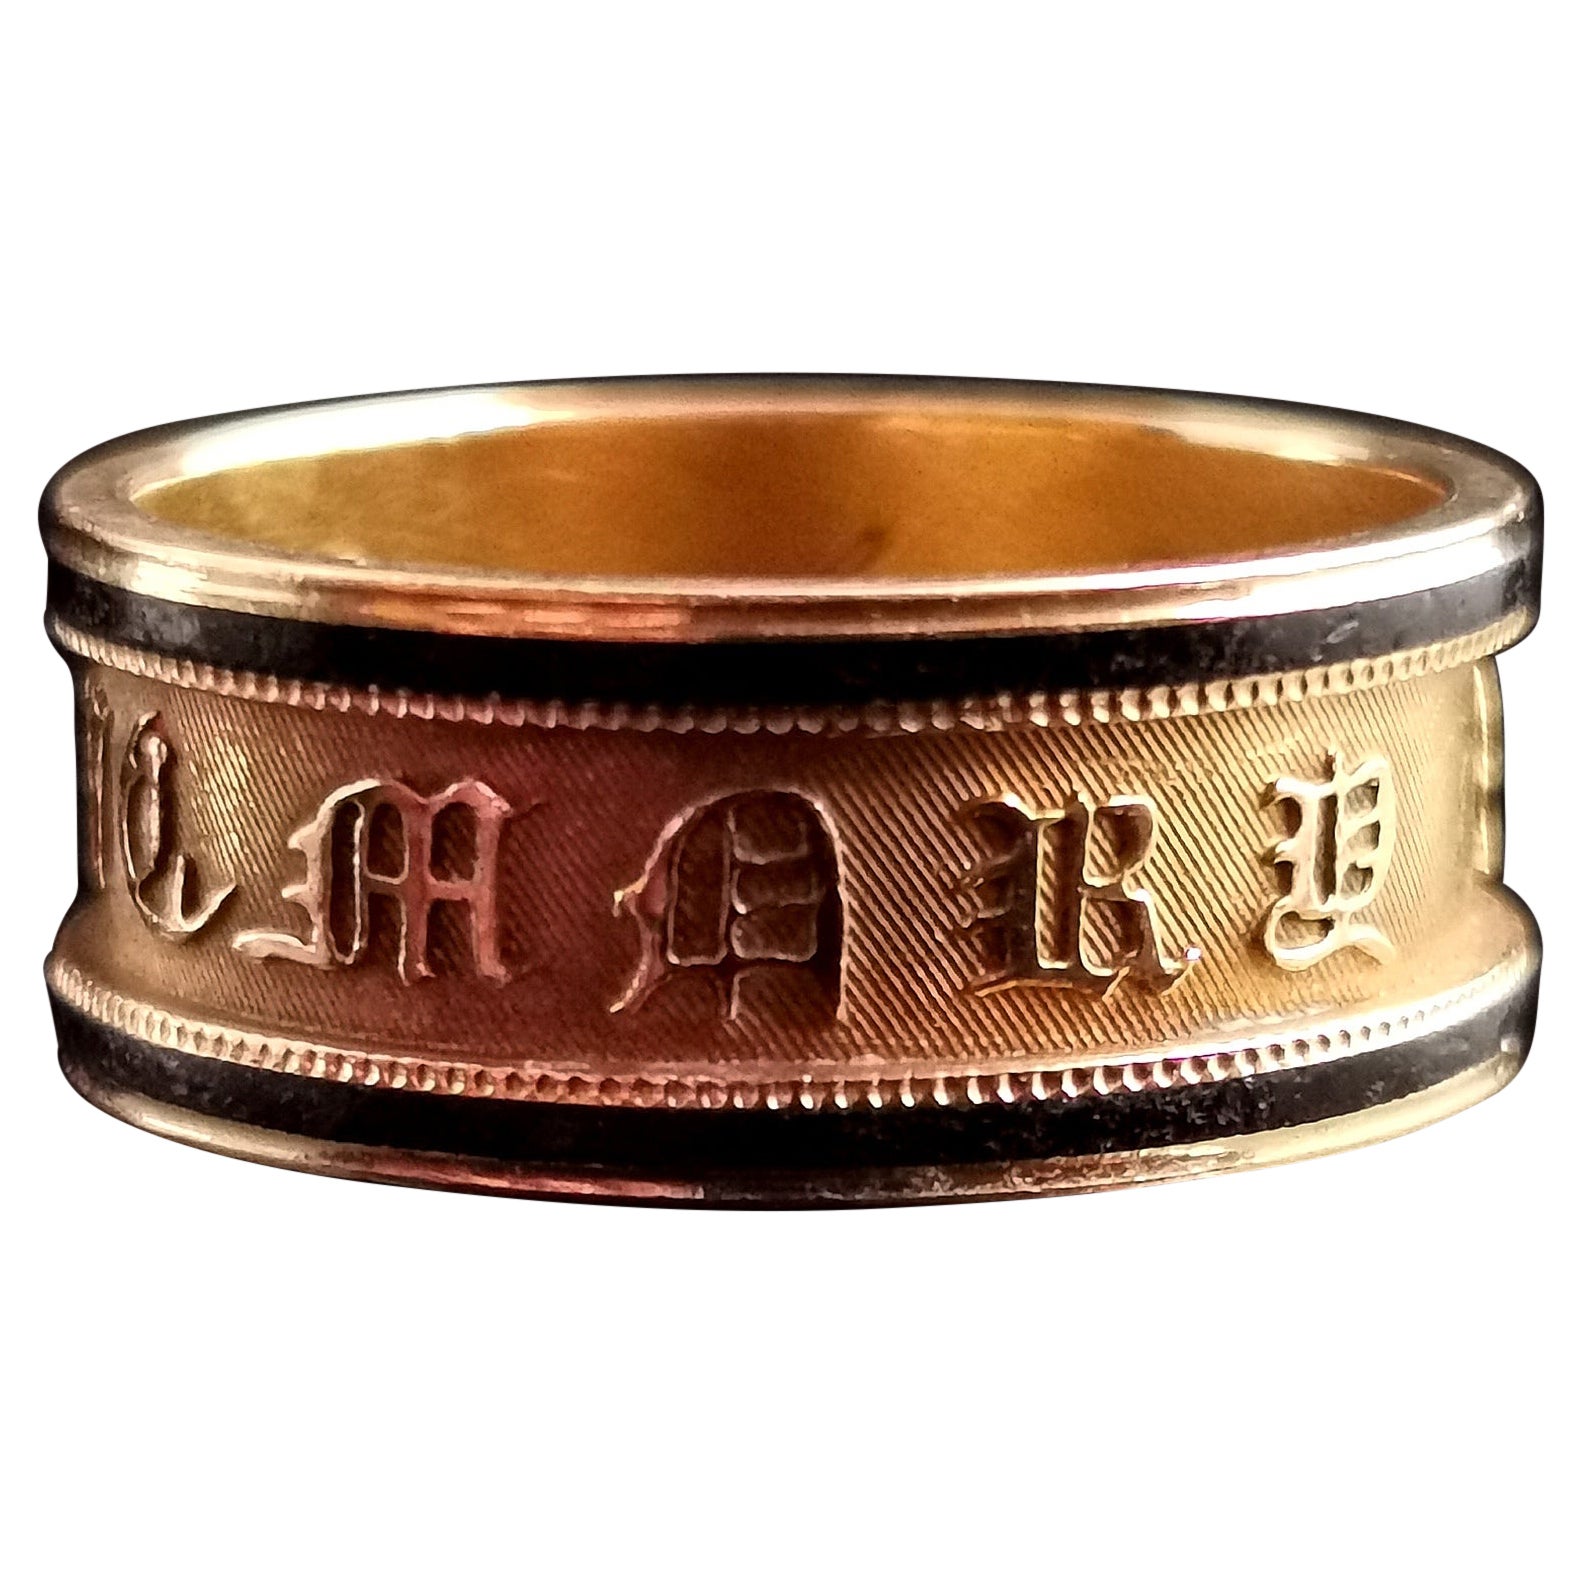 Antique Georgian Mourning Band Ring, 18k Gold, Black Enamel, in Memory of